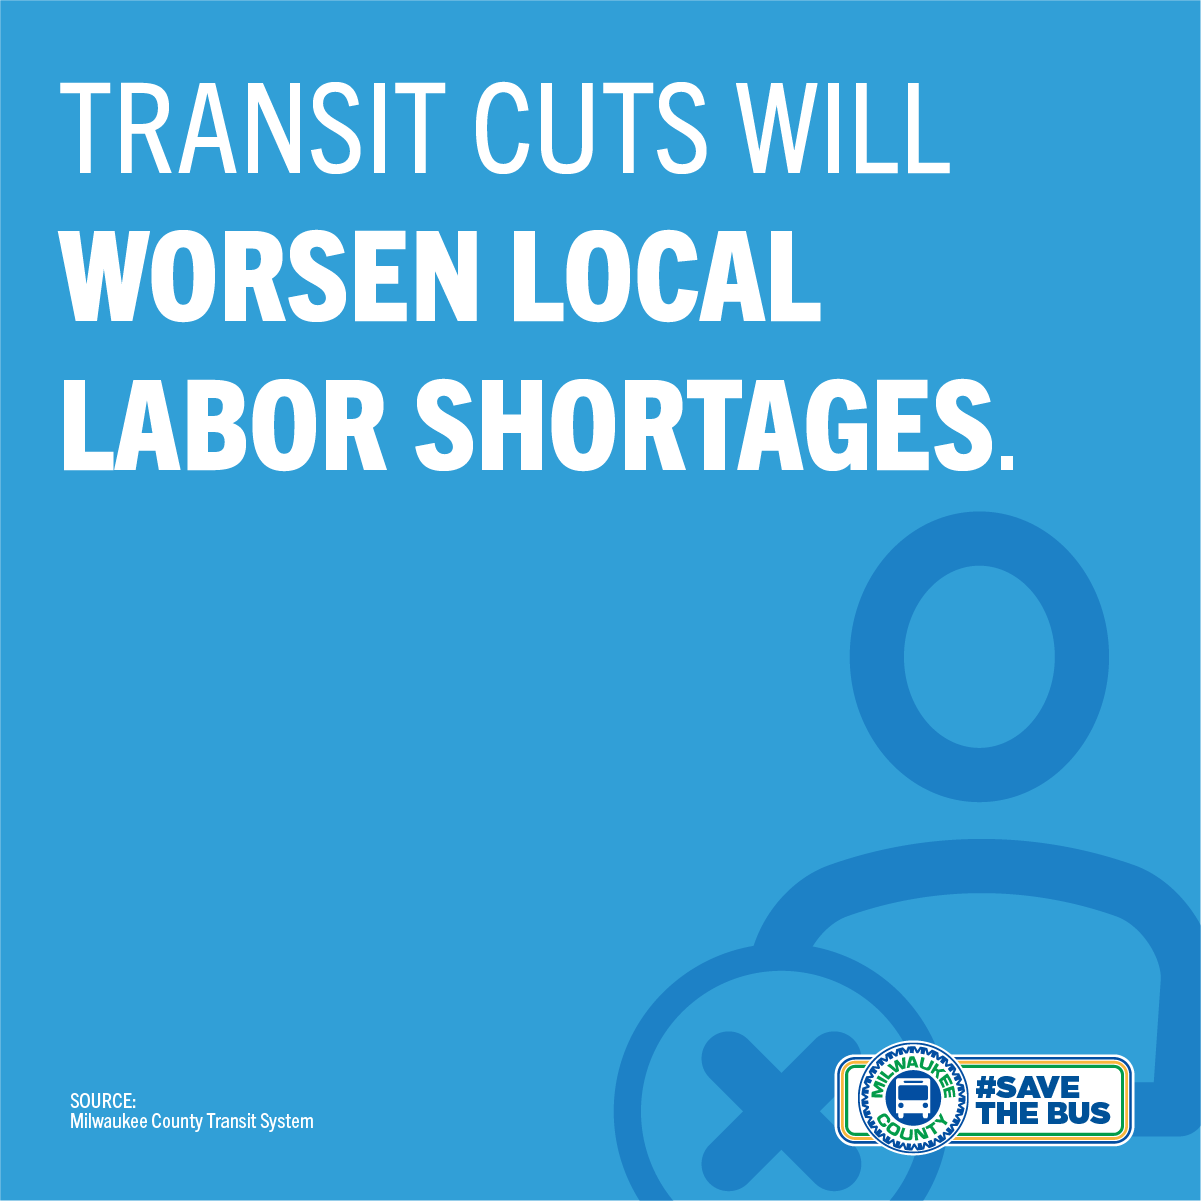 Transit cuts will worsen local labor shortages.